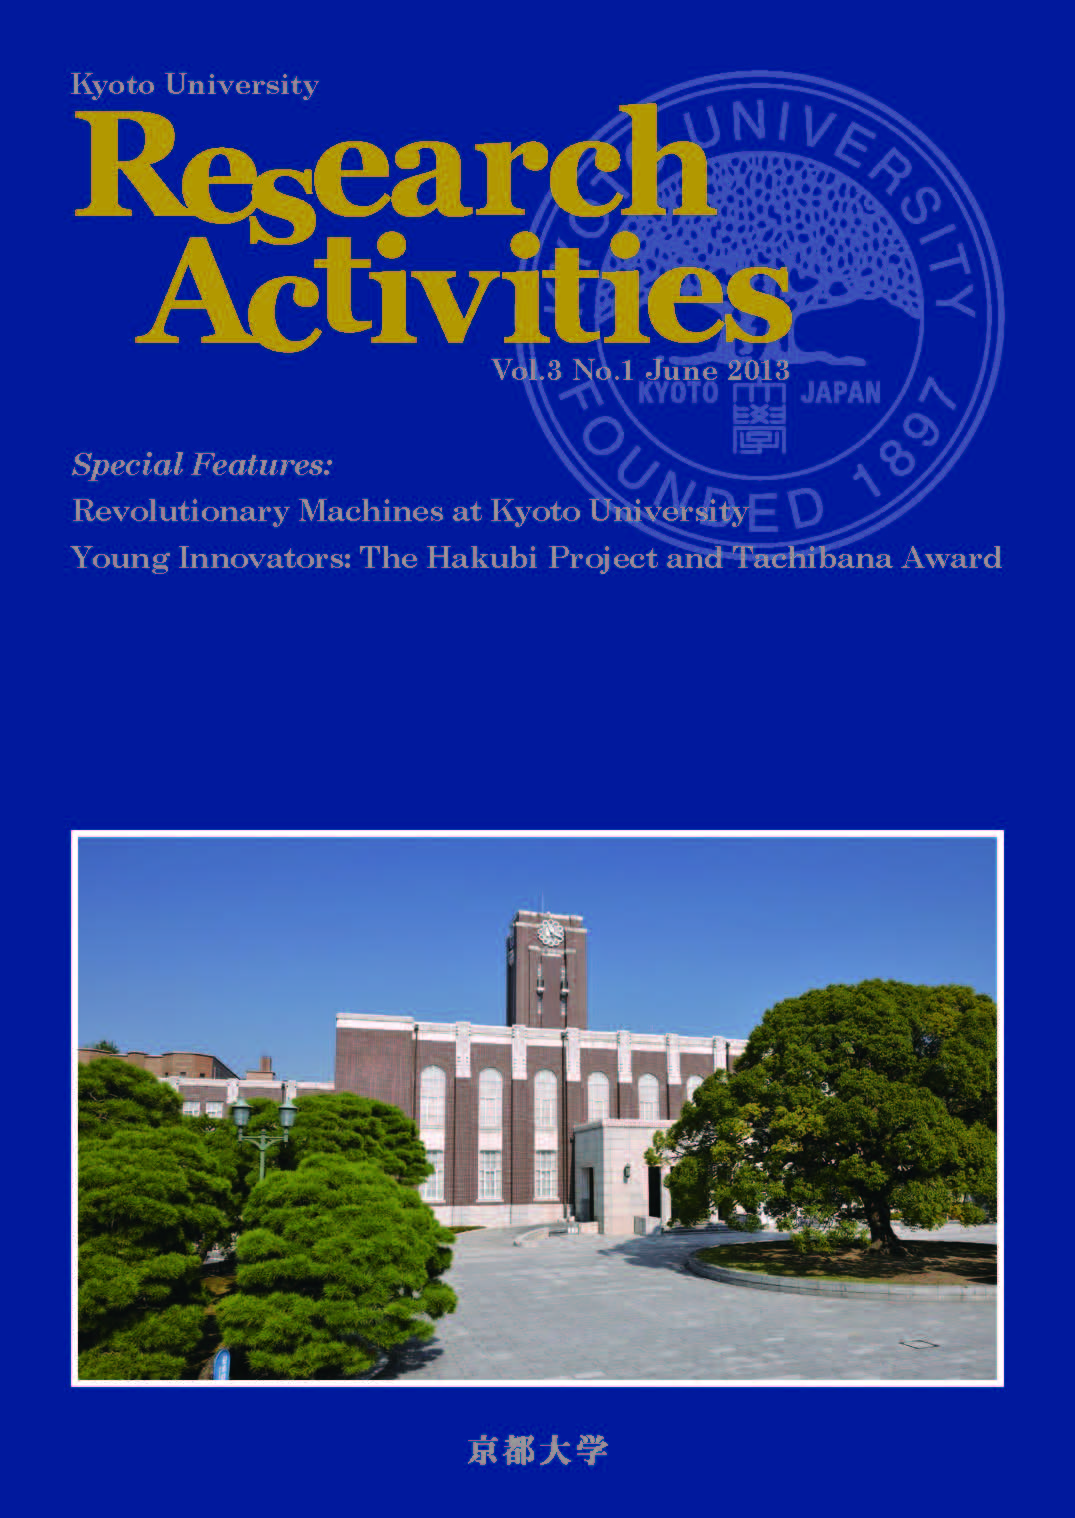 Kyoto University Research Activities Vol.3 No.1 June 2013